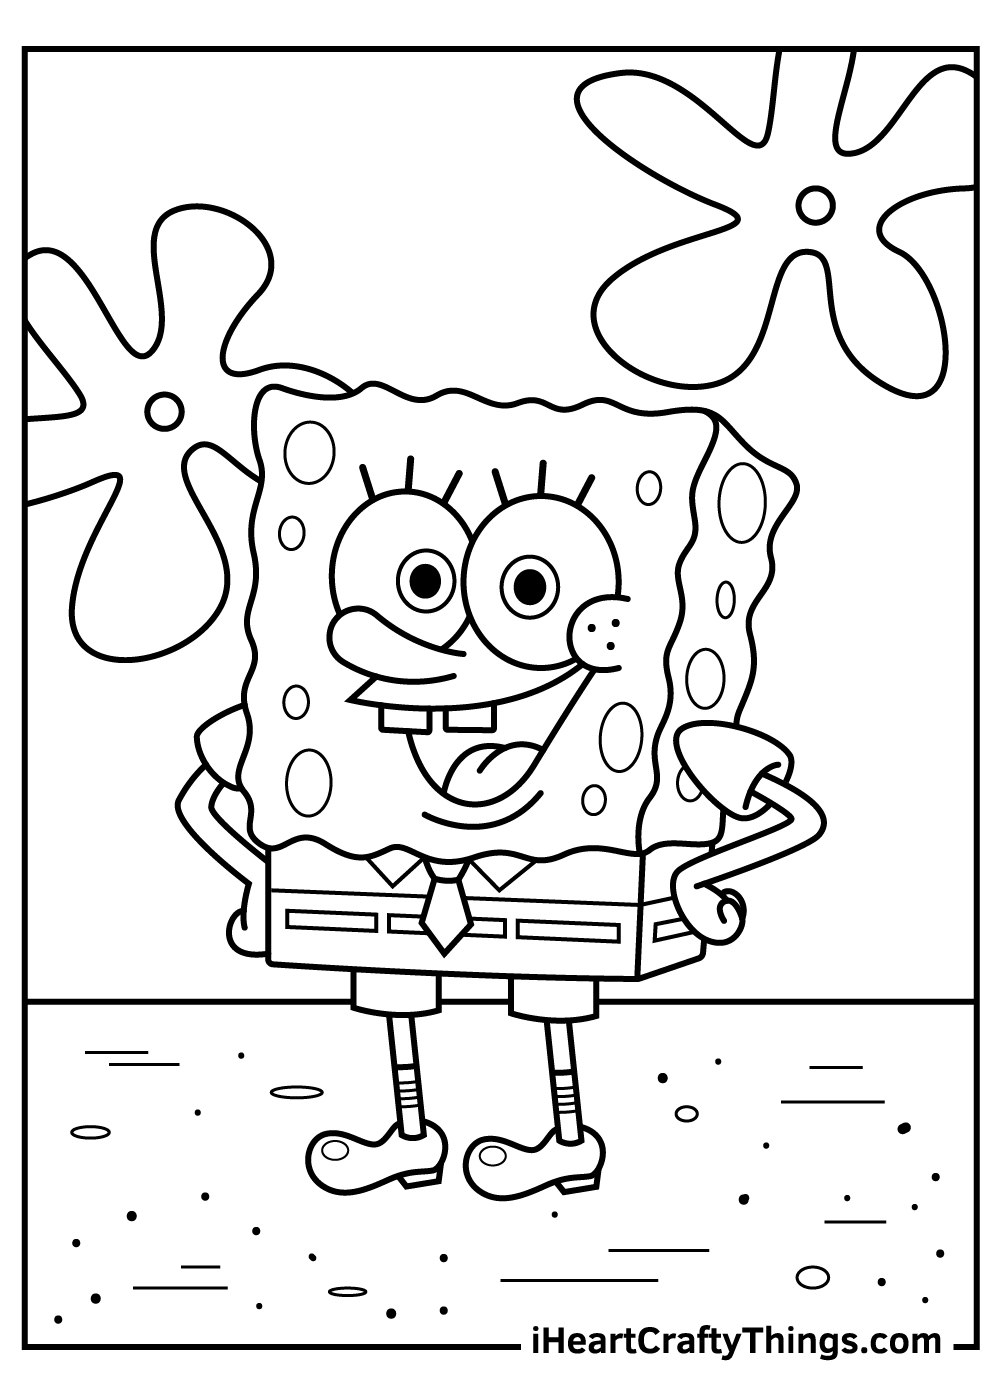 Cute SpongeBob Coloring Pages free printable